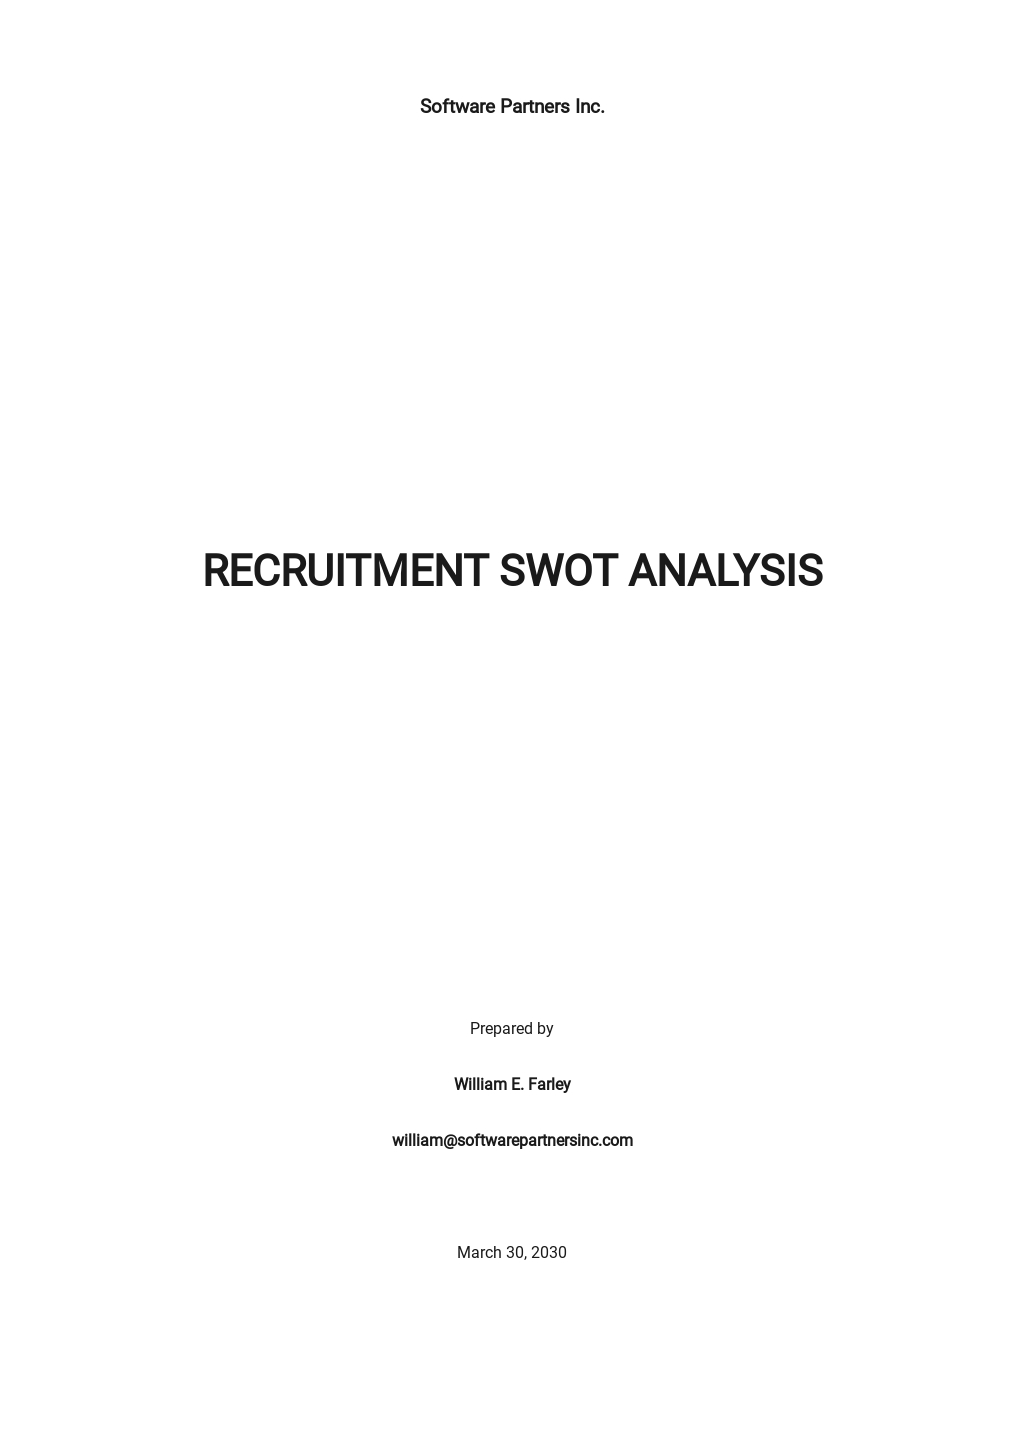 Recruitment swot analysis template.jpe